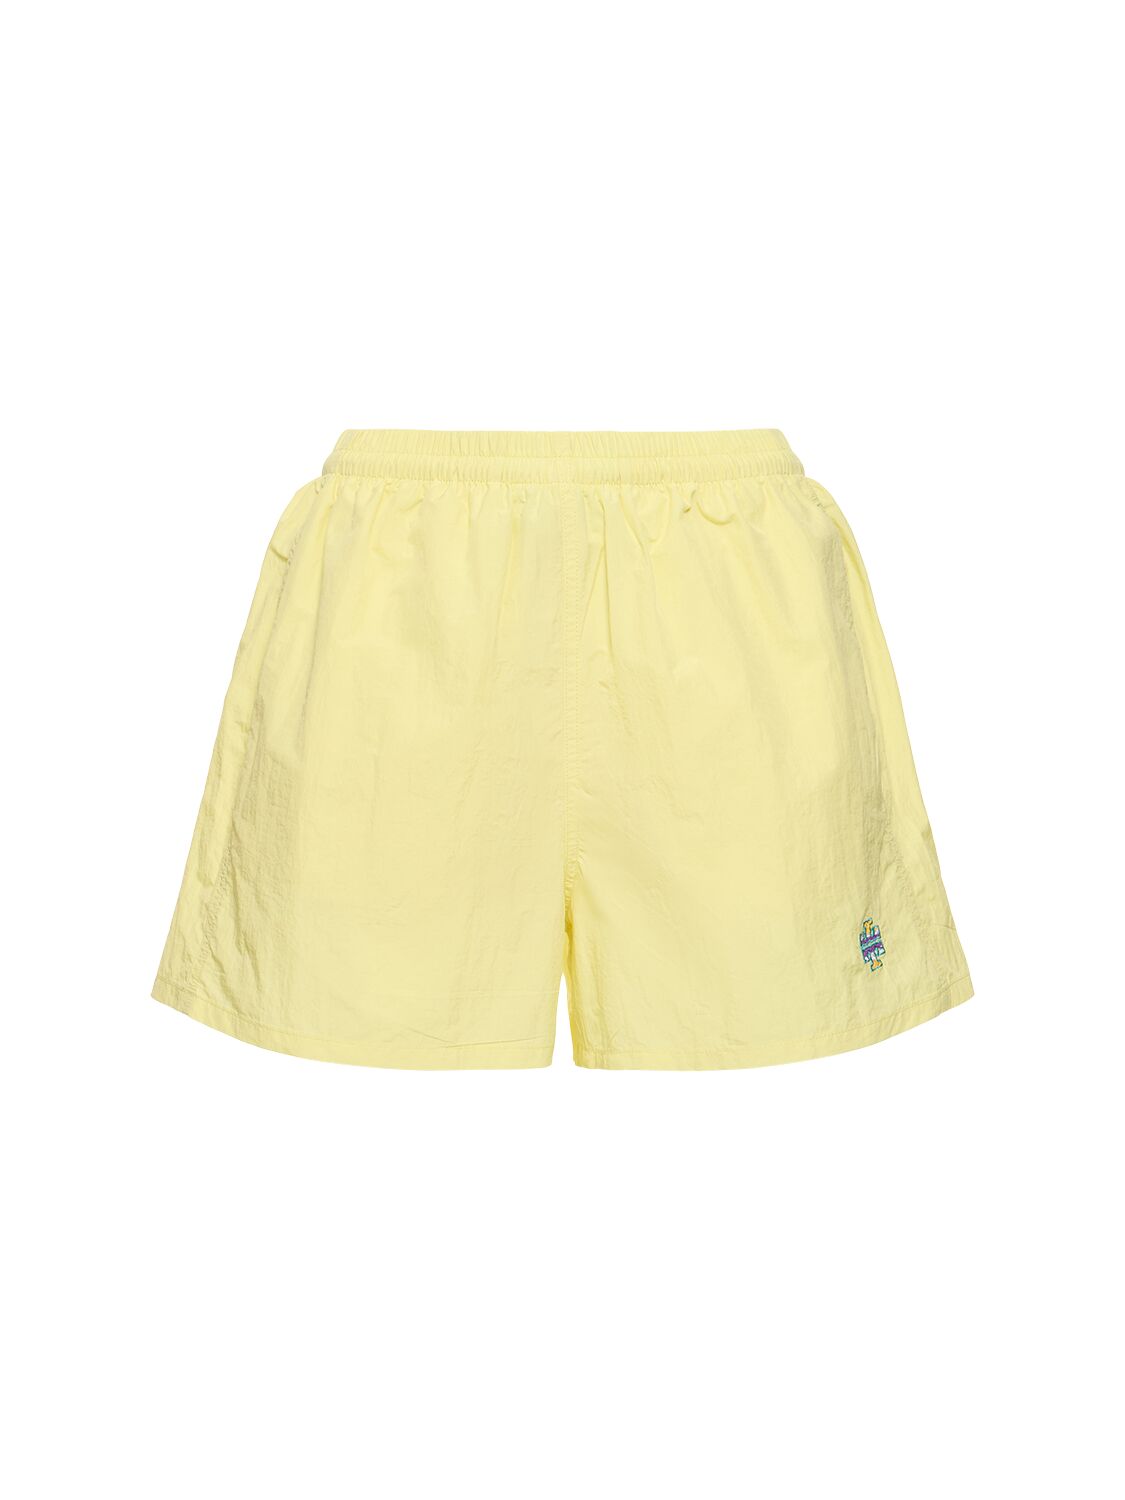 Tory Sport Nylon Camp Shorts In Yellow